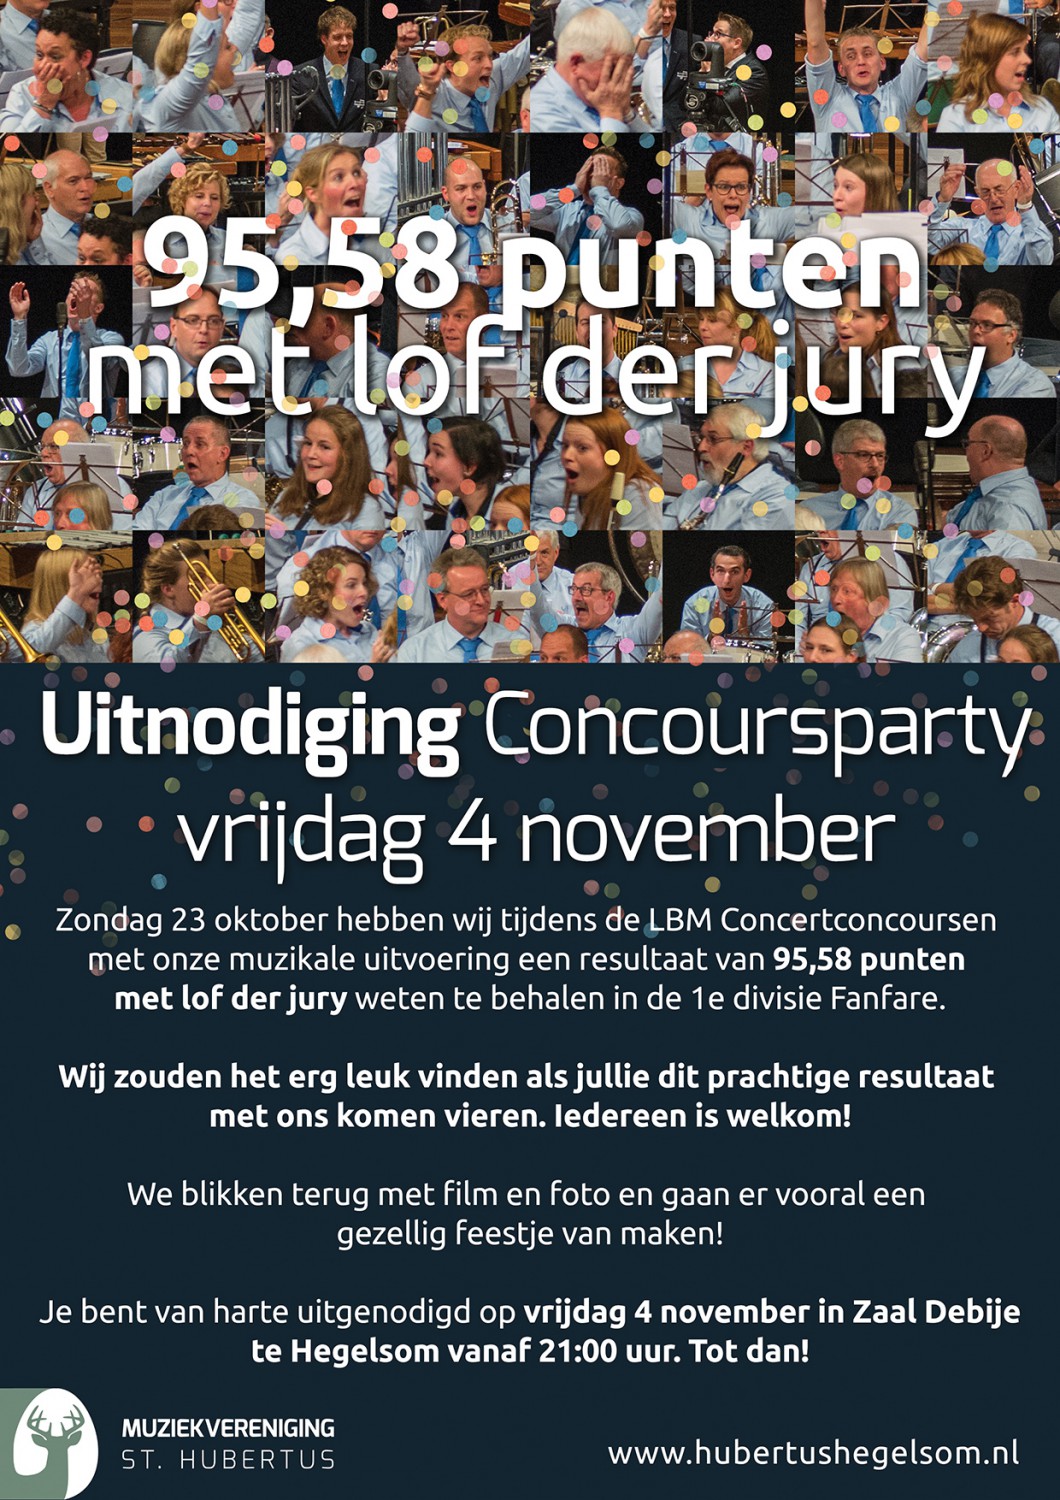 MV Hubertus Concoursparty 2016 poster (RGB-web)